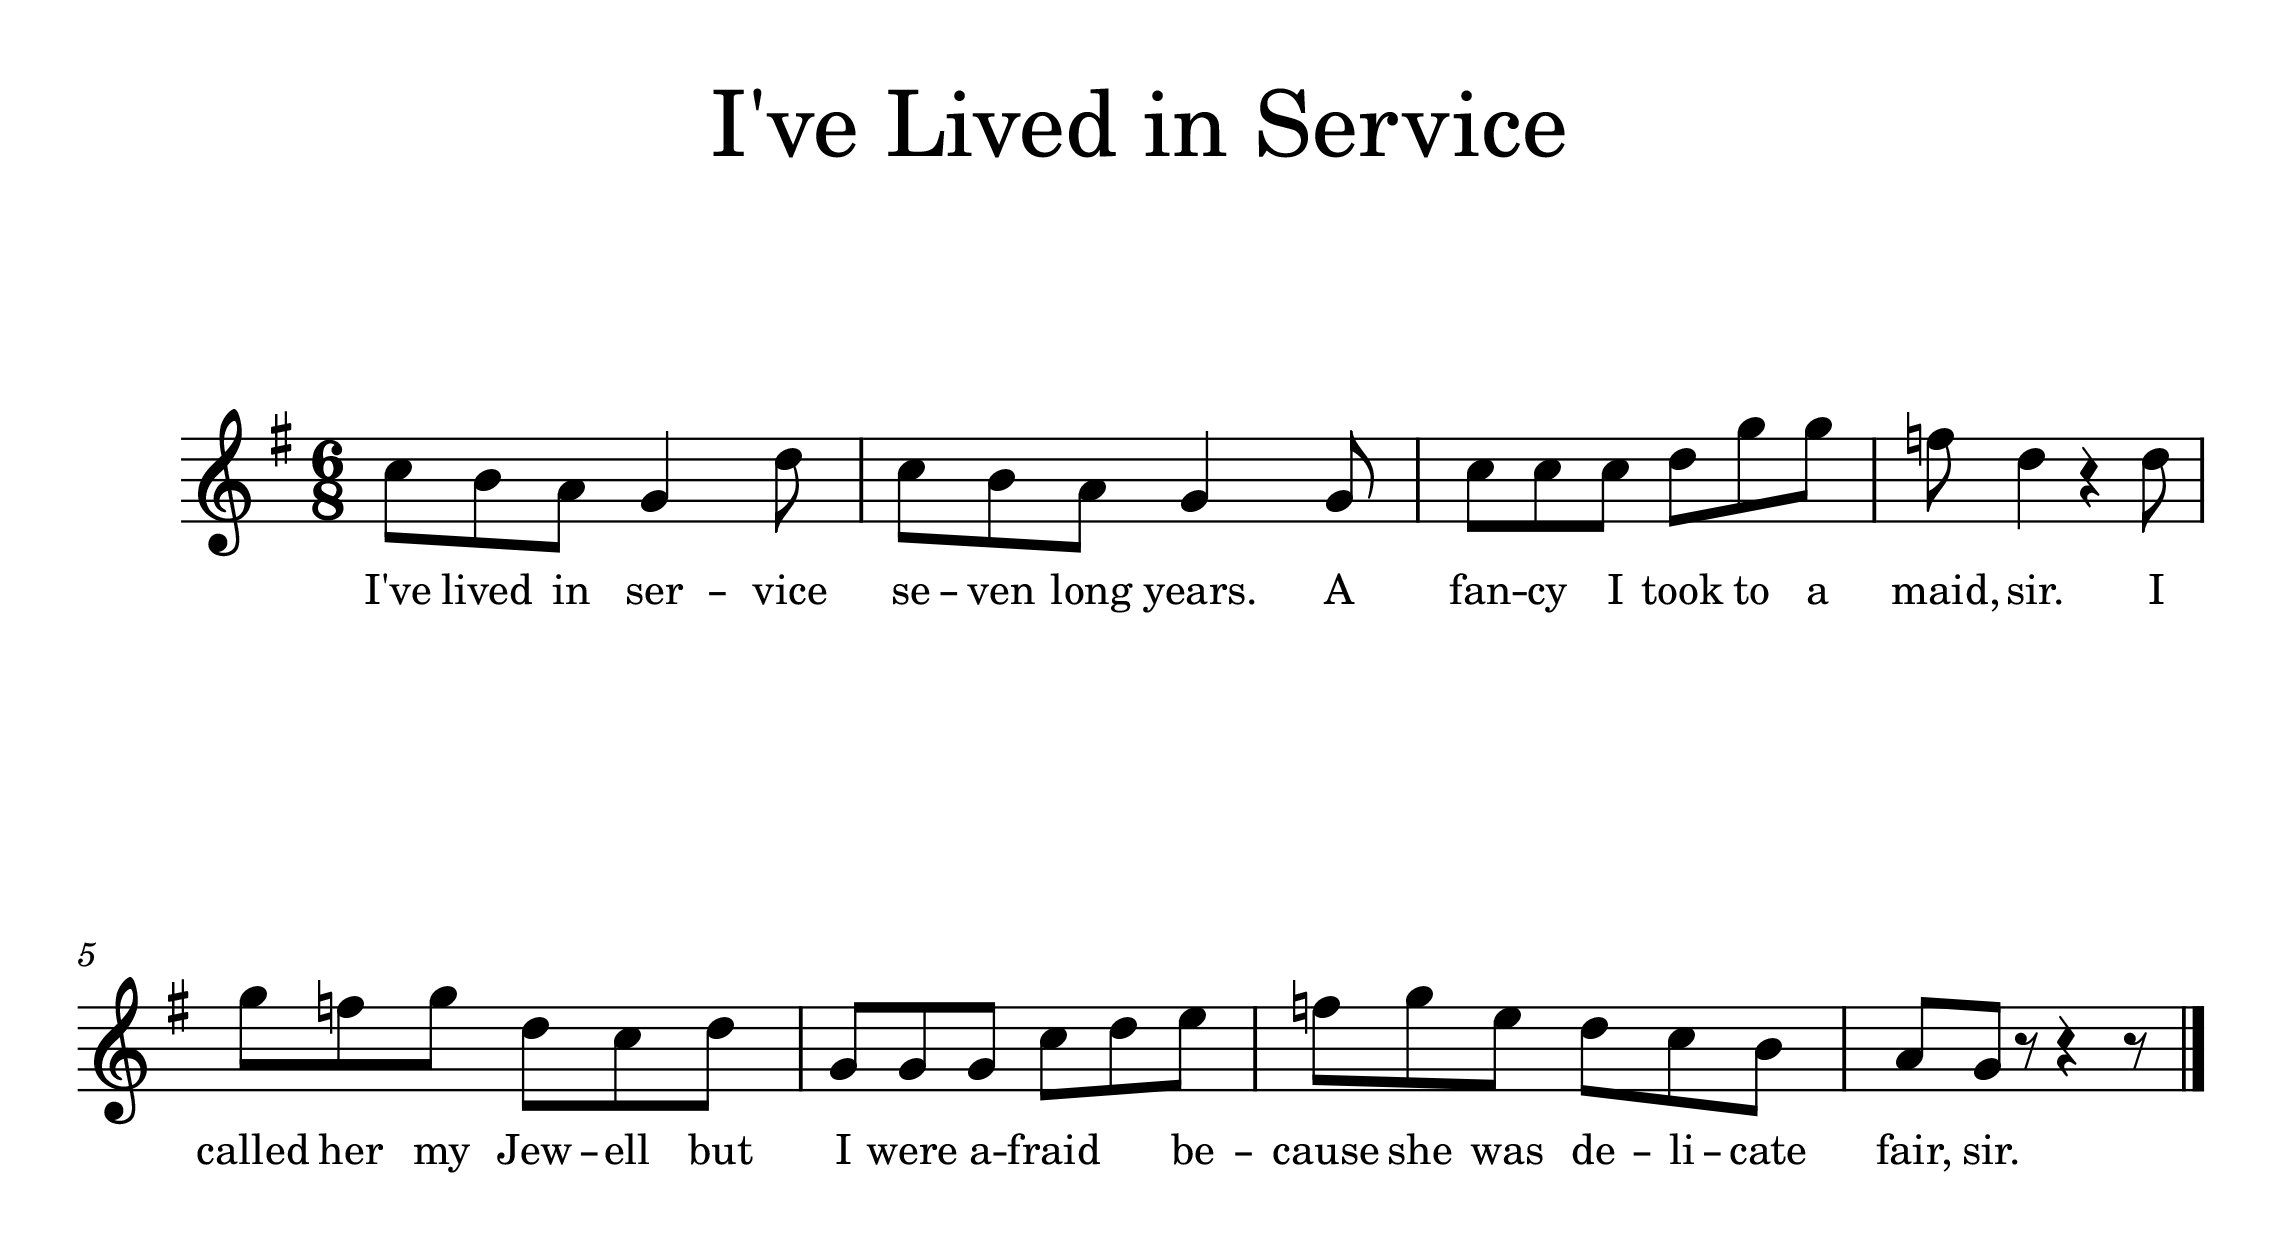 Sheet music for "I've Lived in Service"